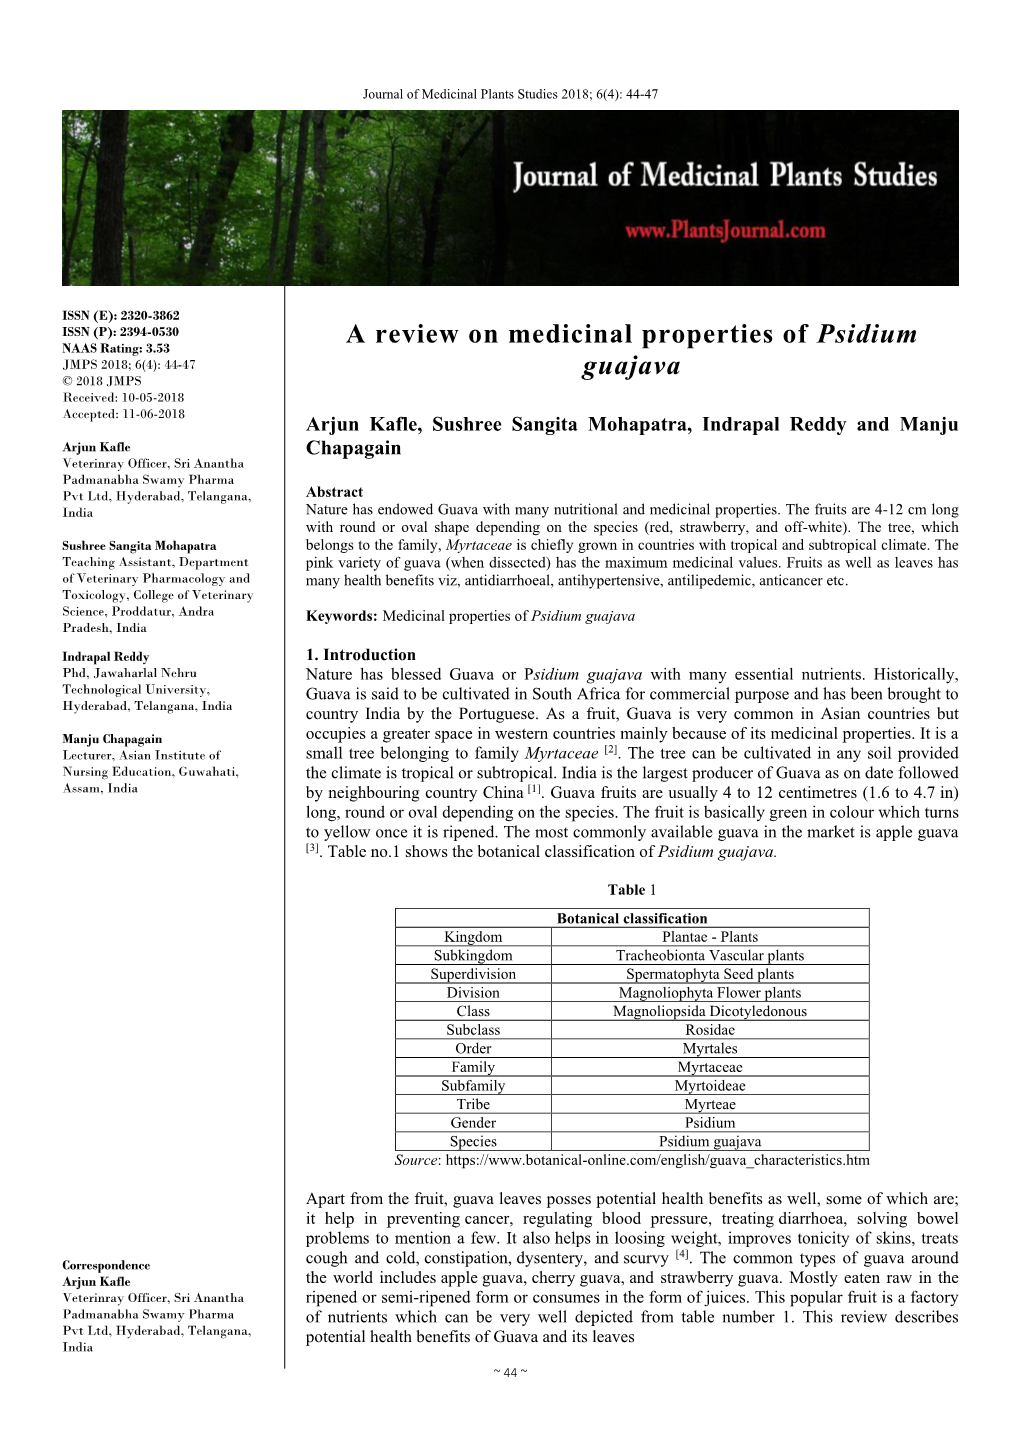 A Review on Medicinal Properties of Psidium Guajava